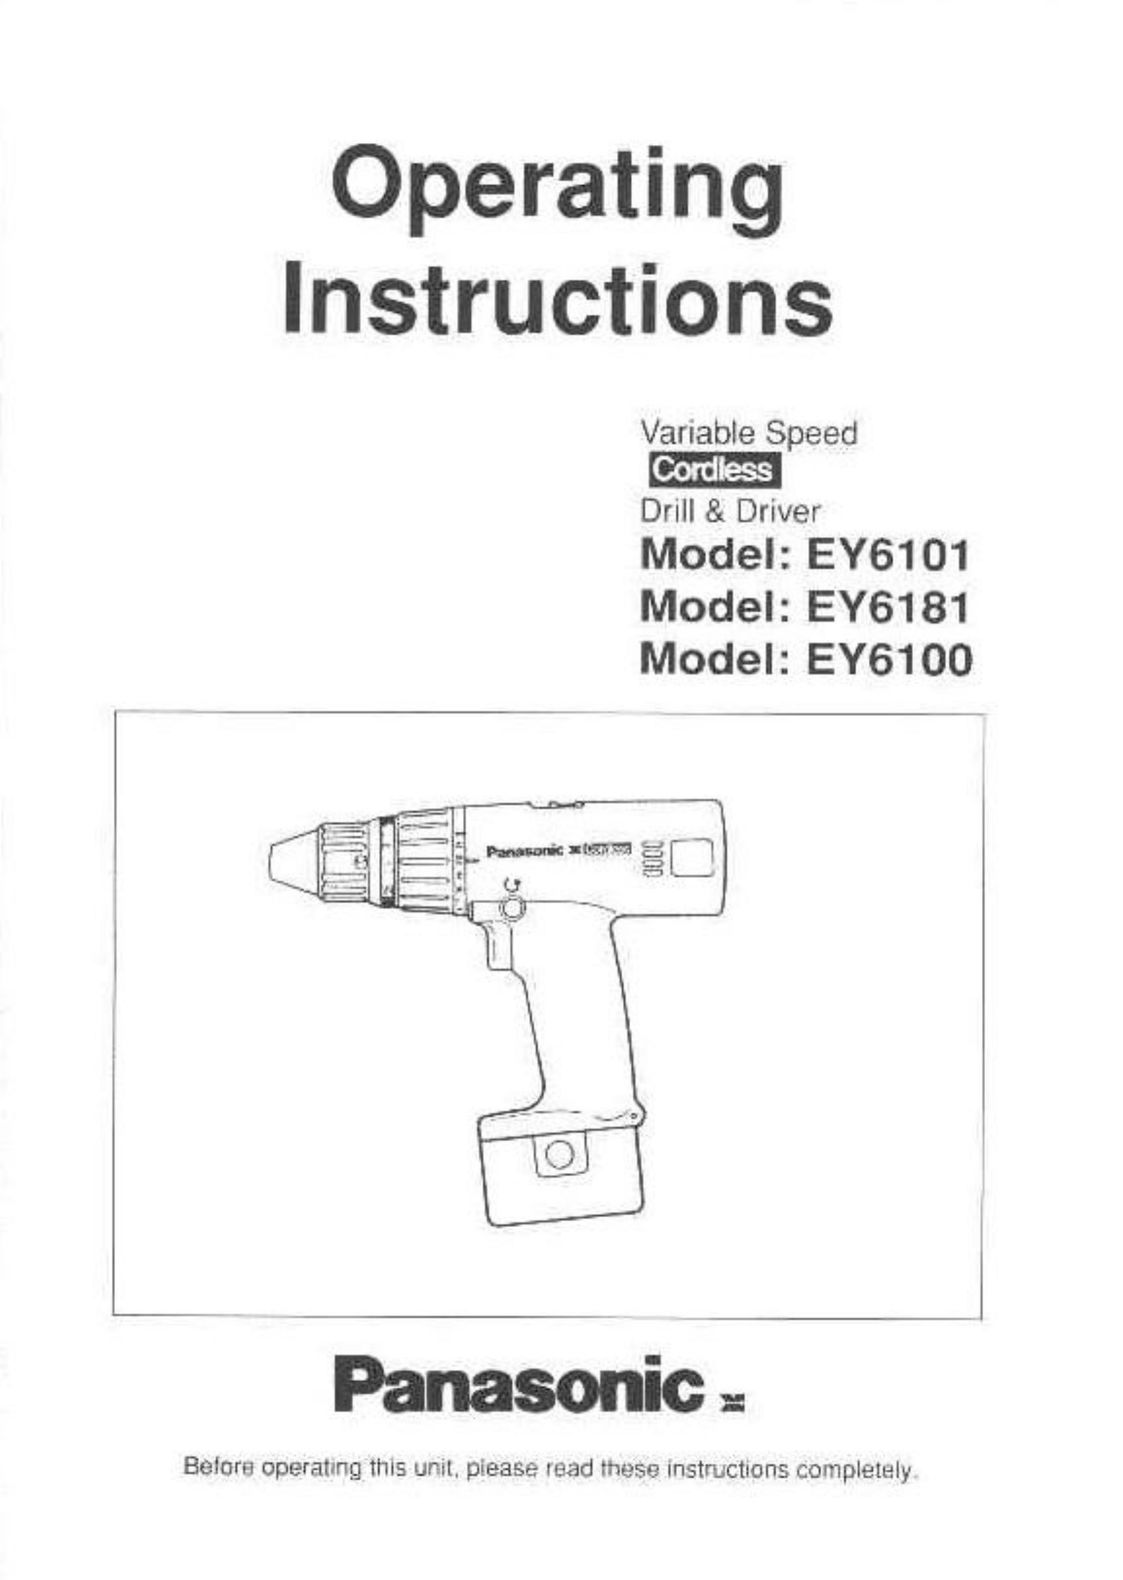 Panasonic EY6101 Cordless Drill User Manual